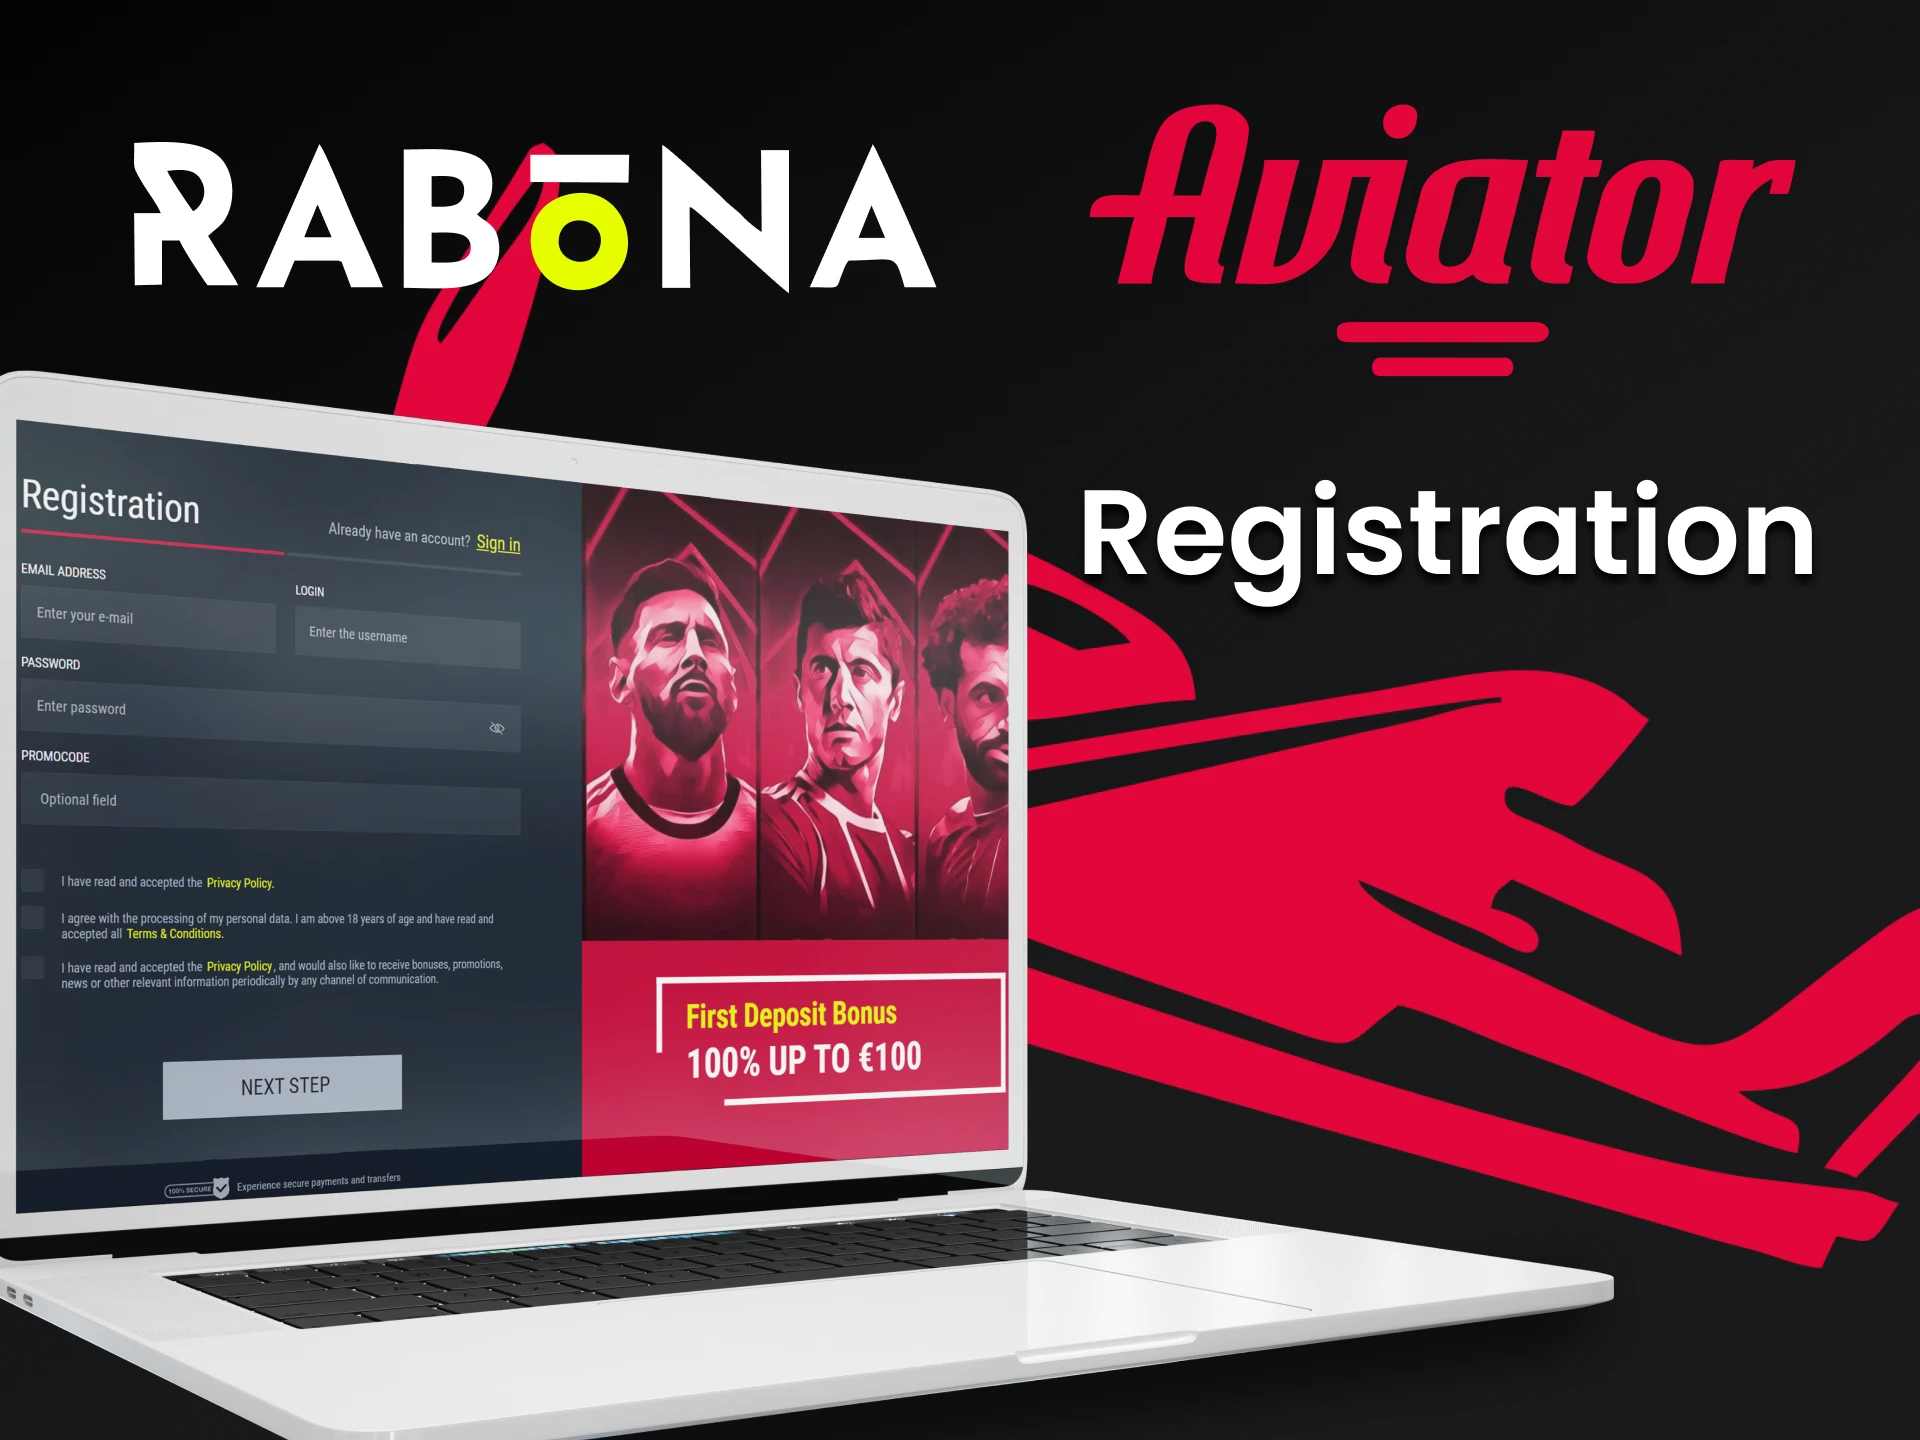 Register on Rabona and play Aviator.